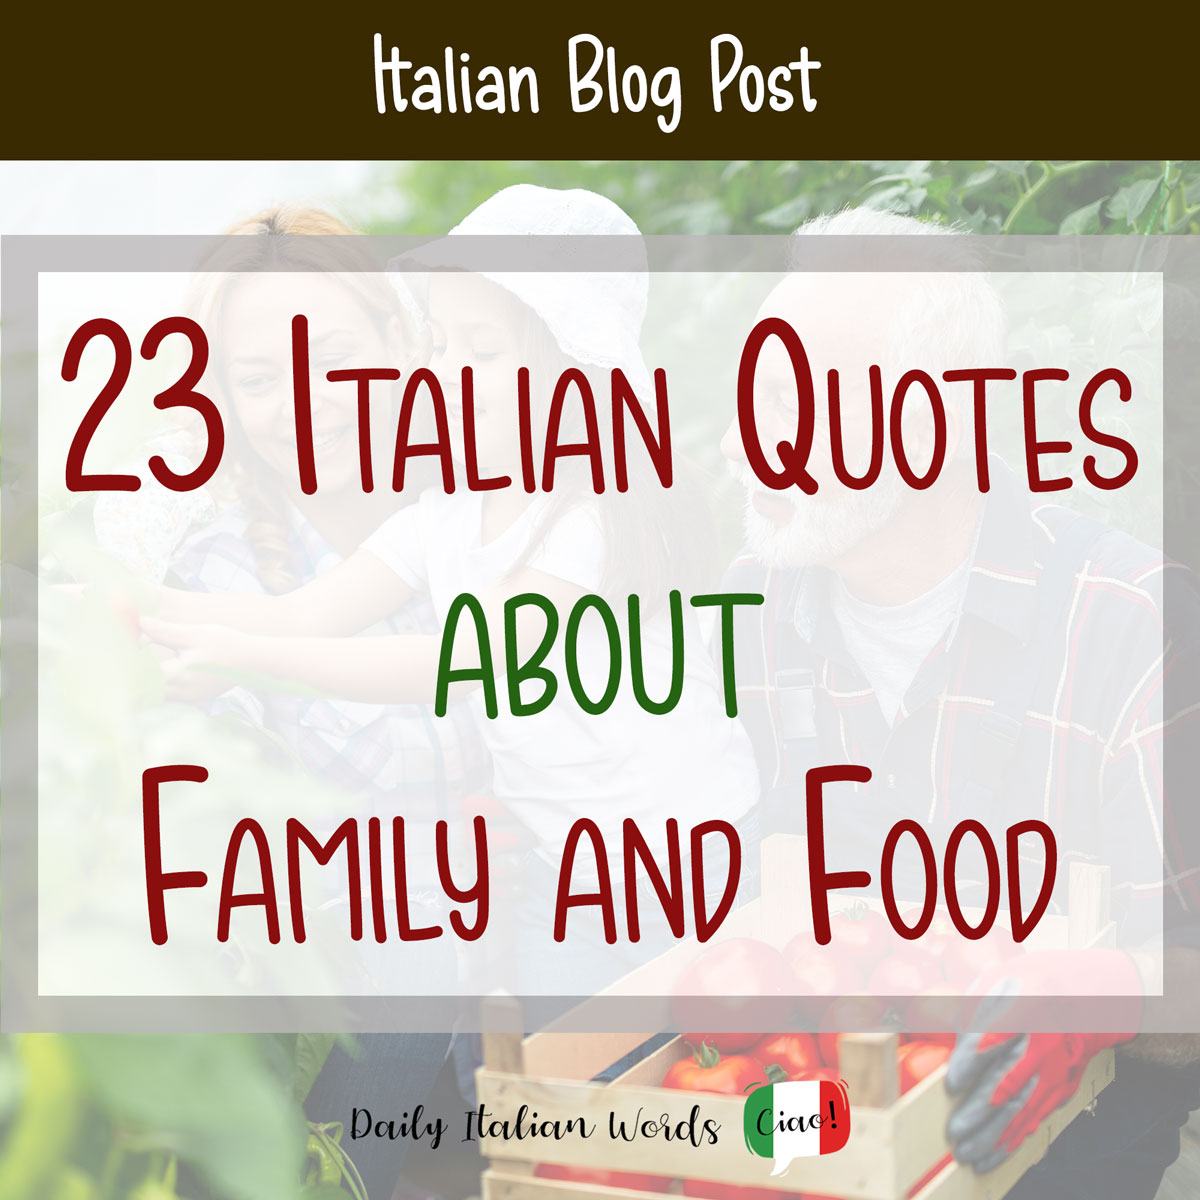 La Famiglia E Tutto Sign Italian Saying Meaning family is